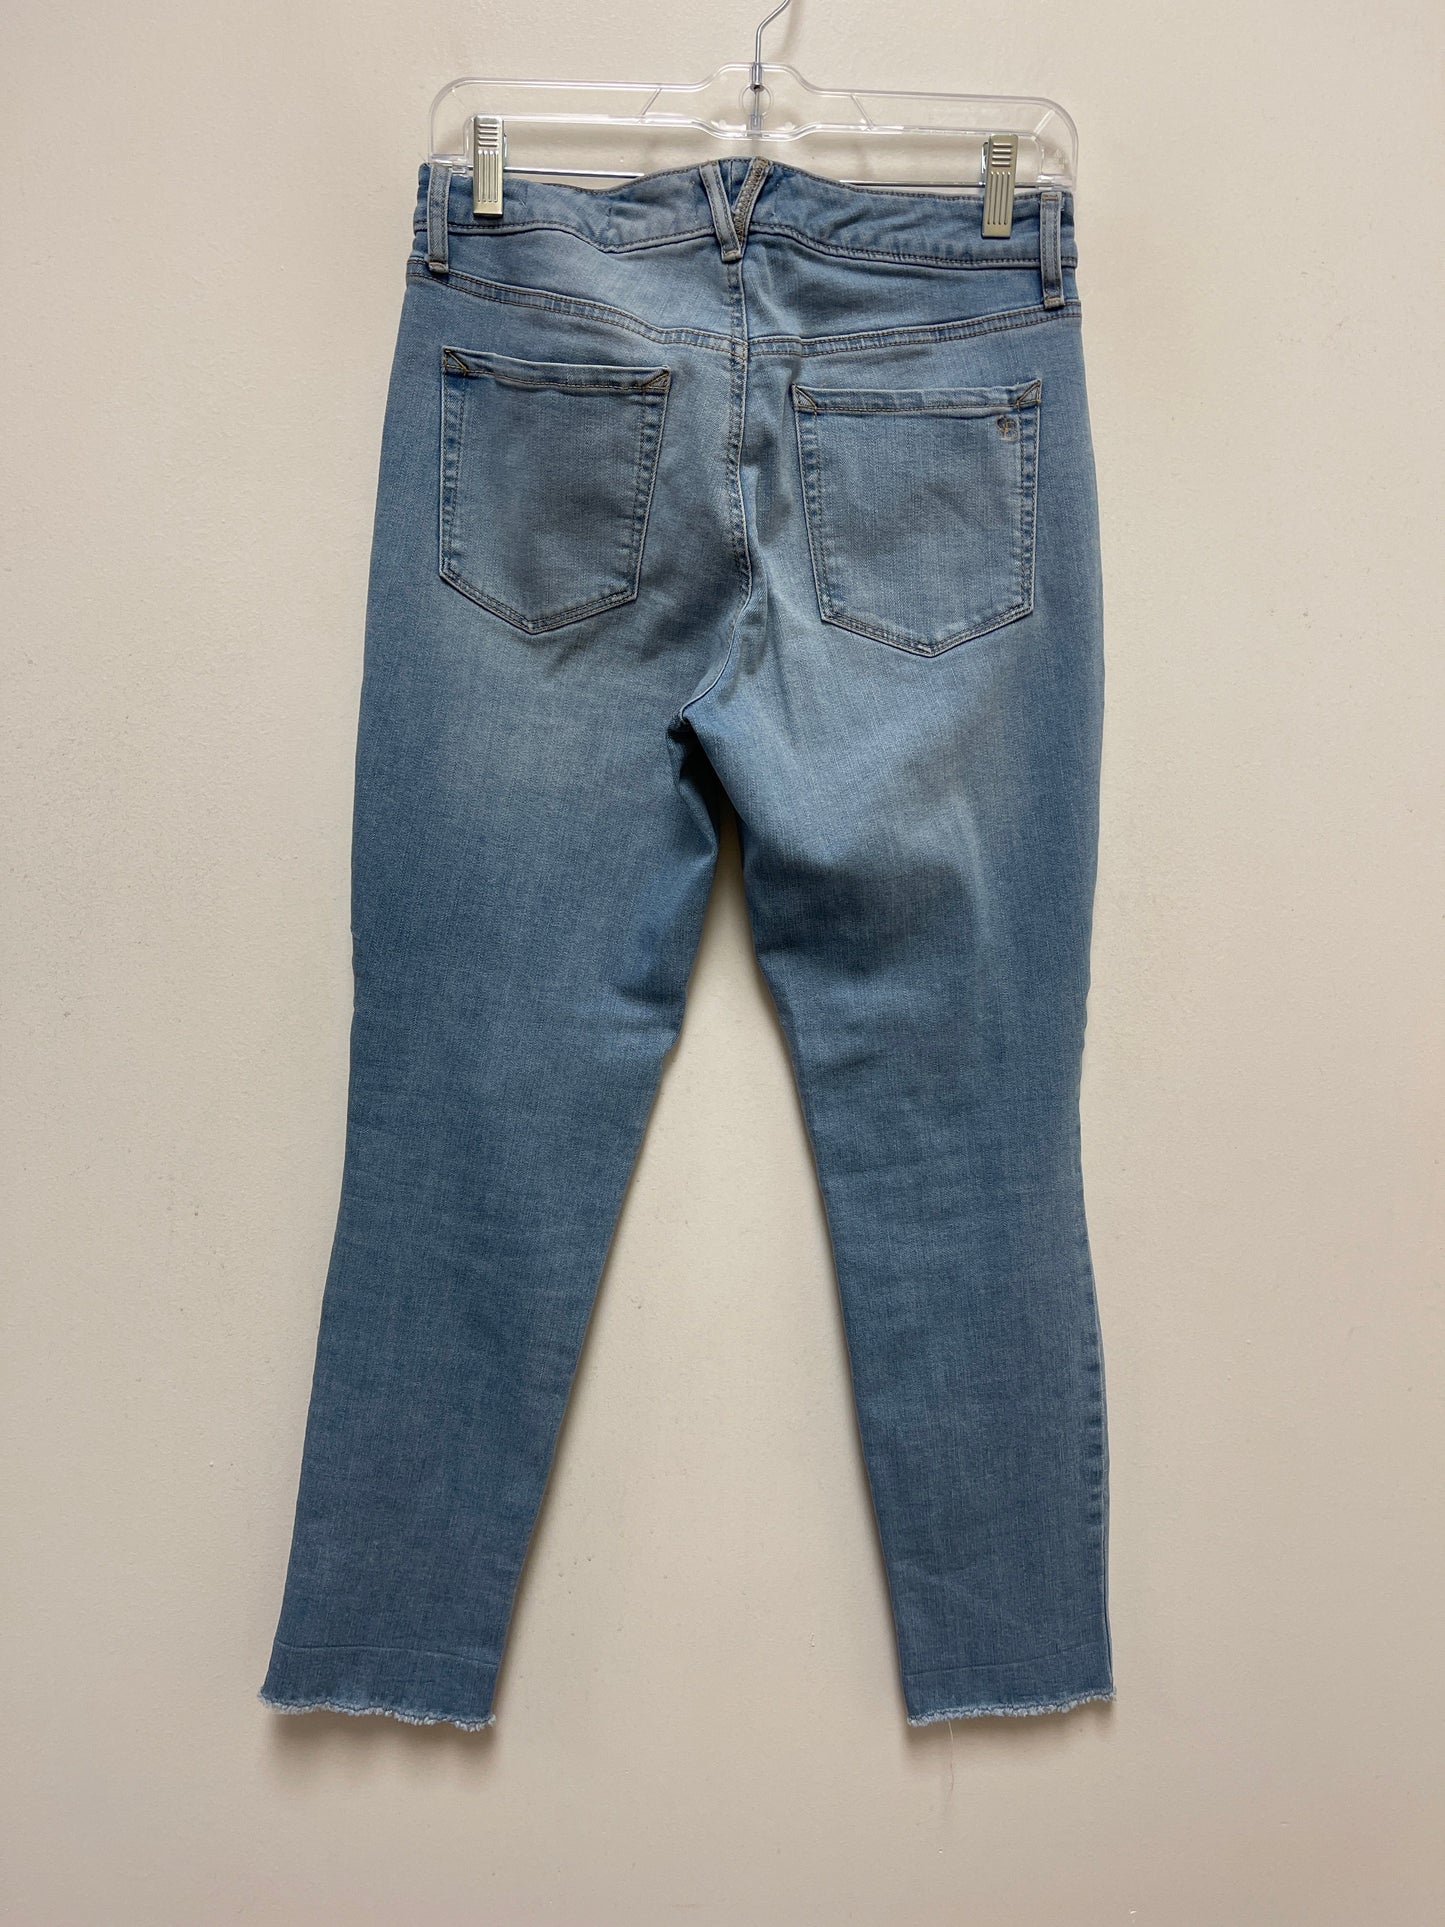 Jeans Skinny By Jessica Simpson  Size: 4